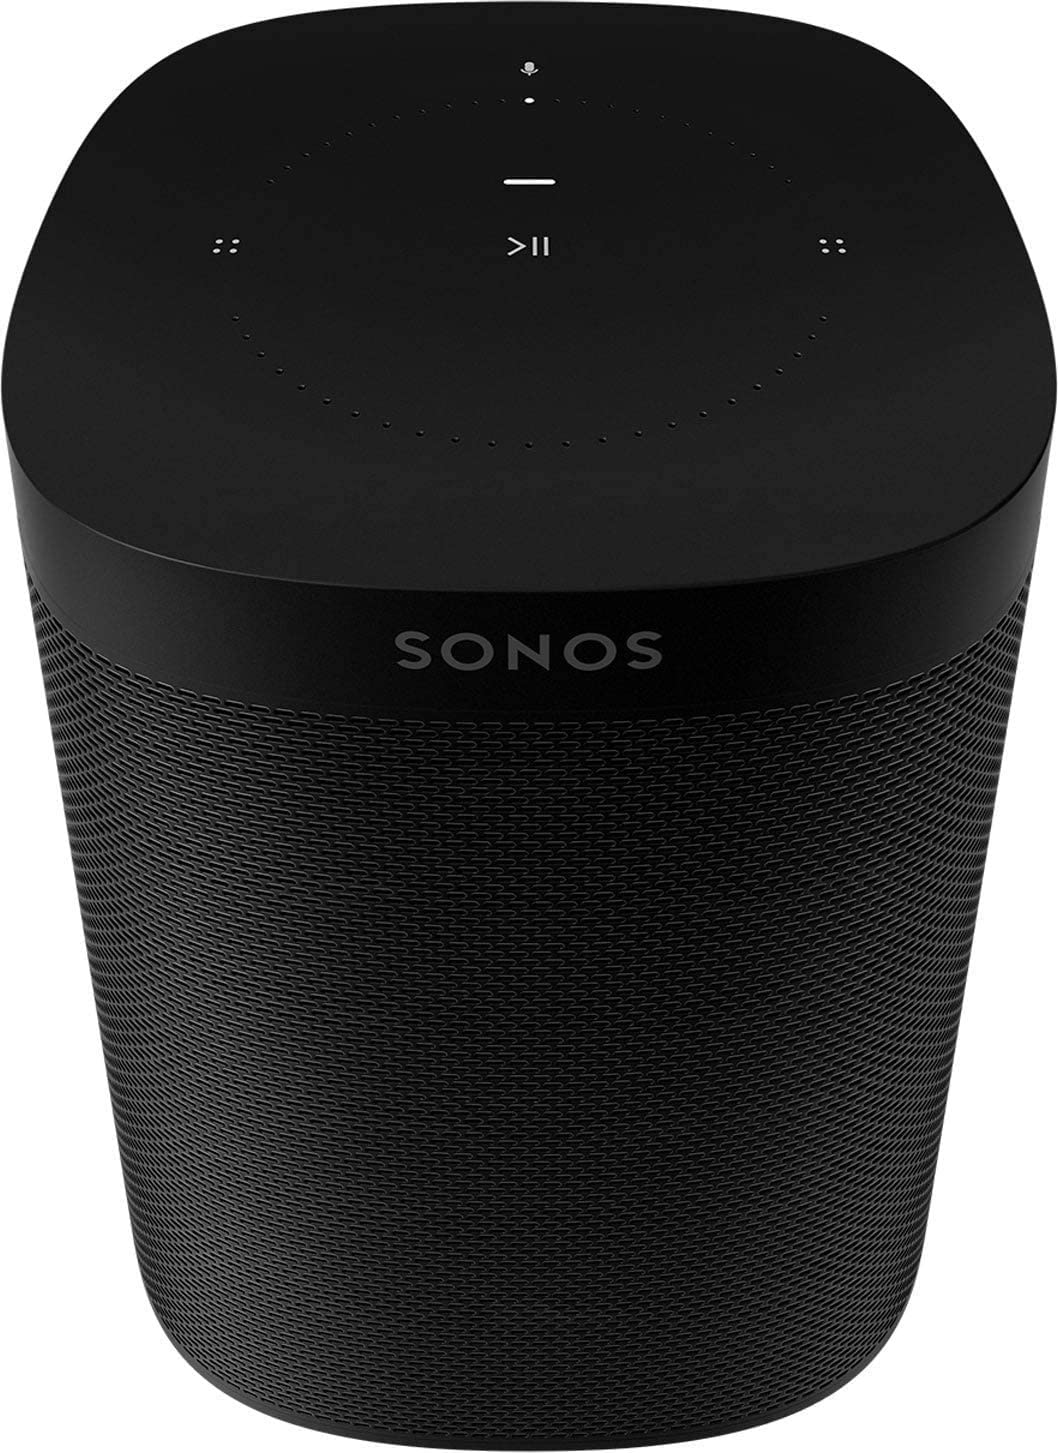 Sonos Multiroom System Comparison - Review